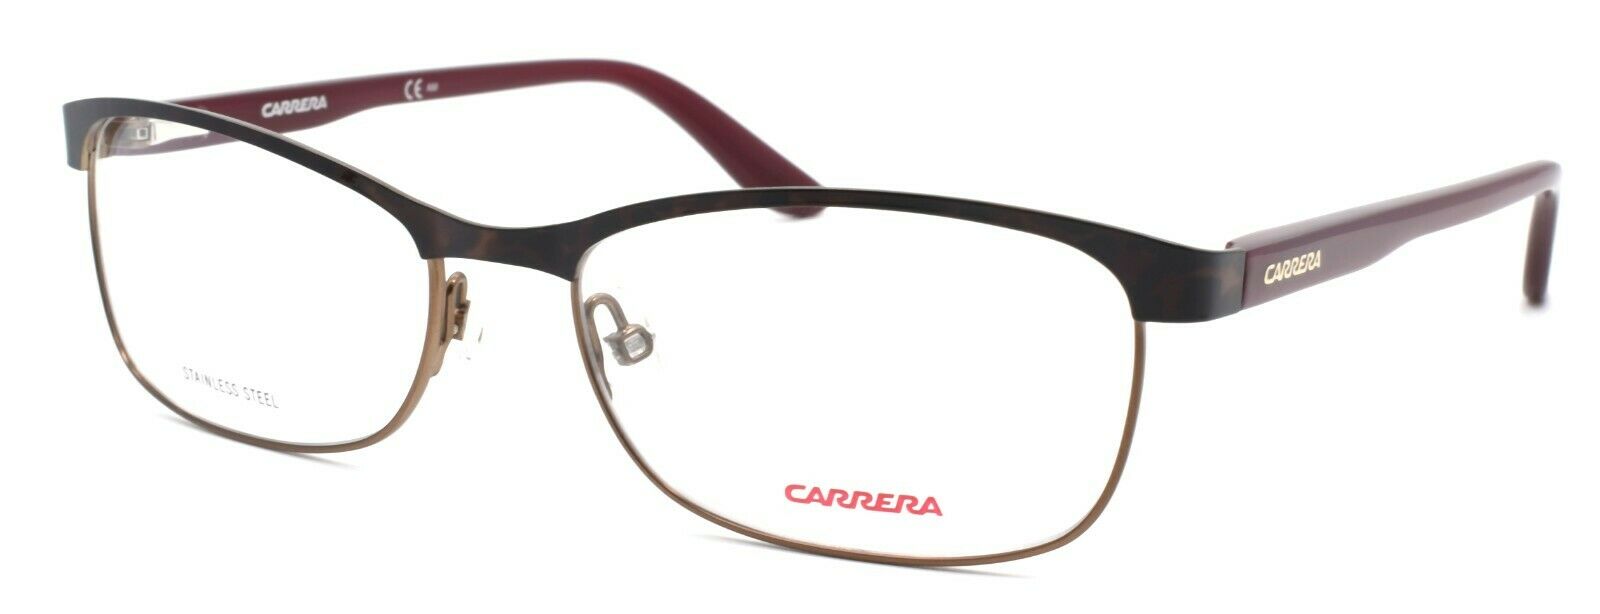 1-Carrera CA6644 MSC Women's Eyeglasses Frames 53-16-135 Demi Brown / Burgundy-716737738238-IKSpecs